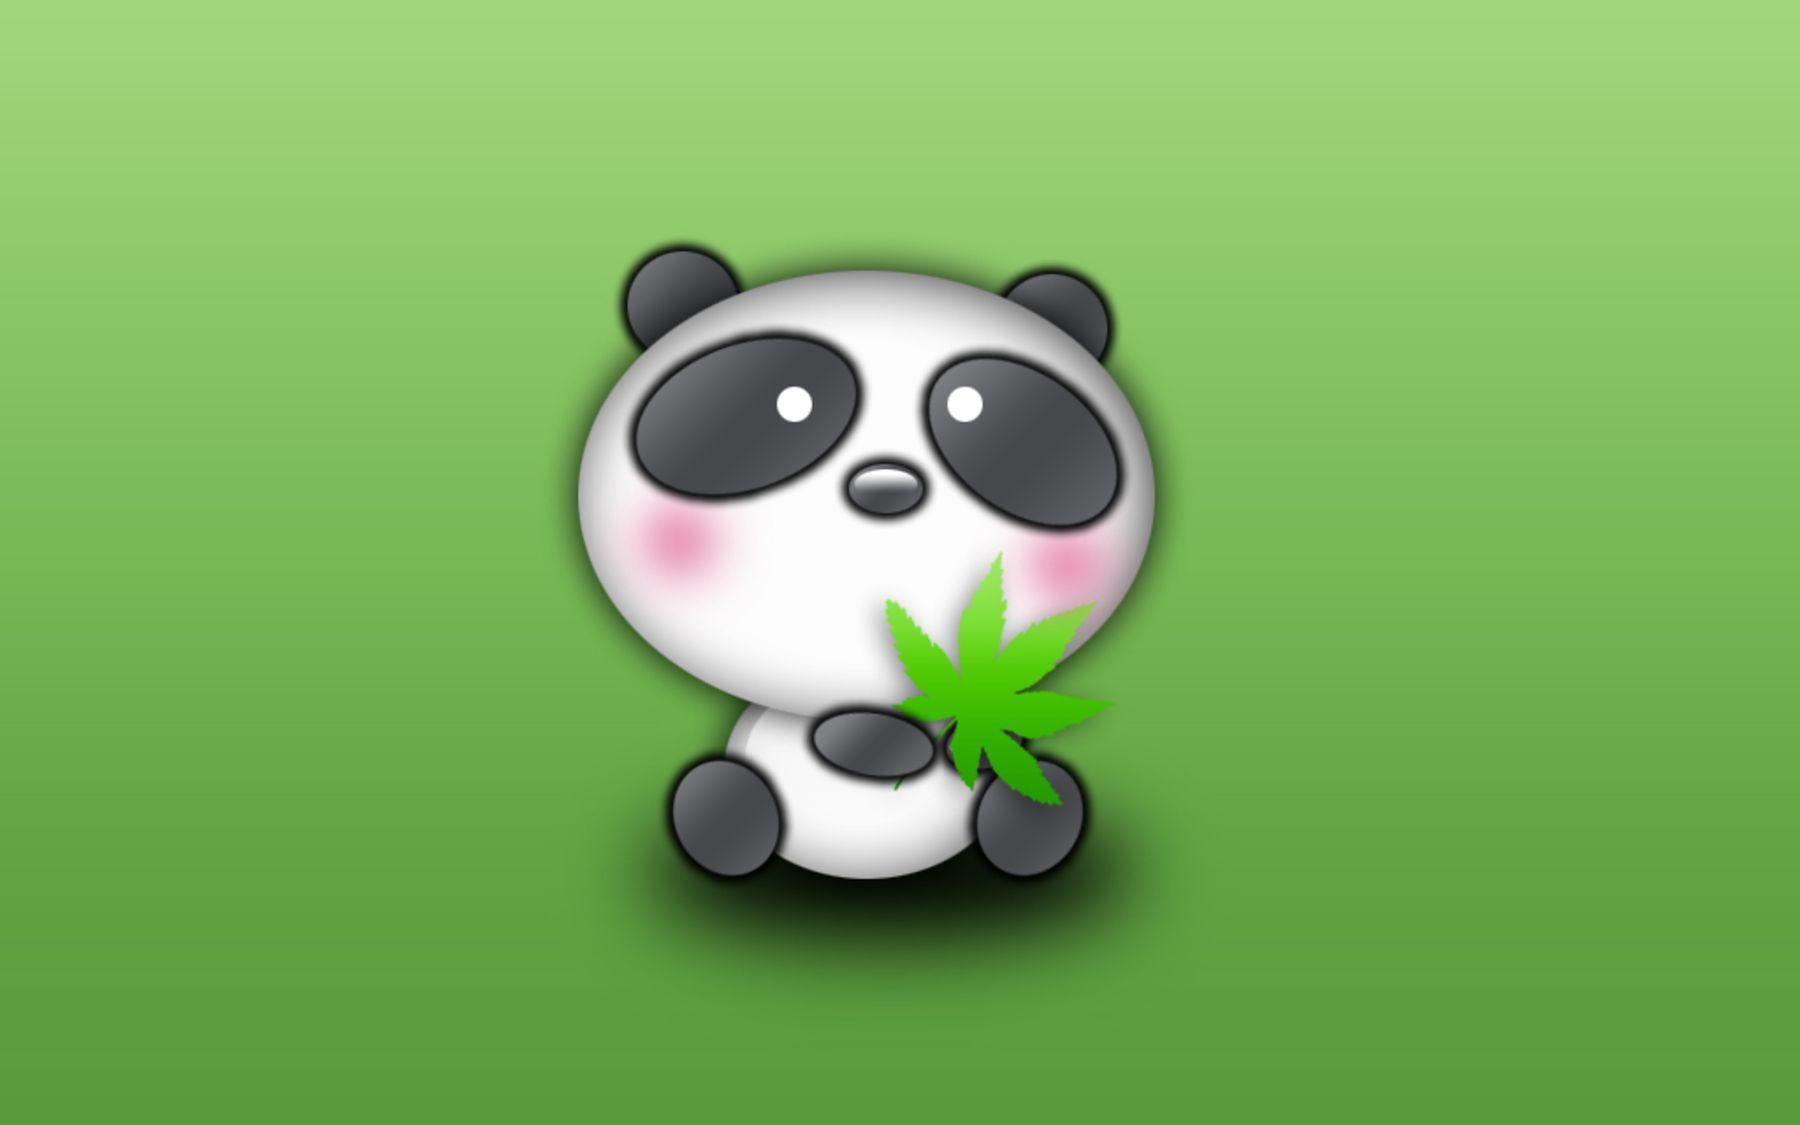 Wallpaper.wiki Cute Panda Desktop Background Tumblr PIC WPE005154